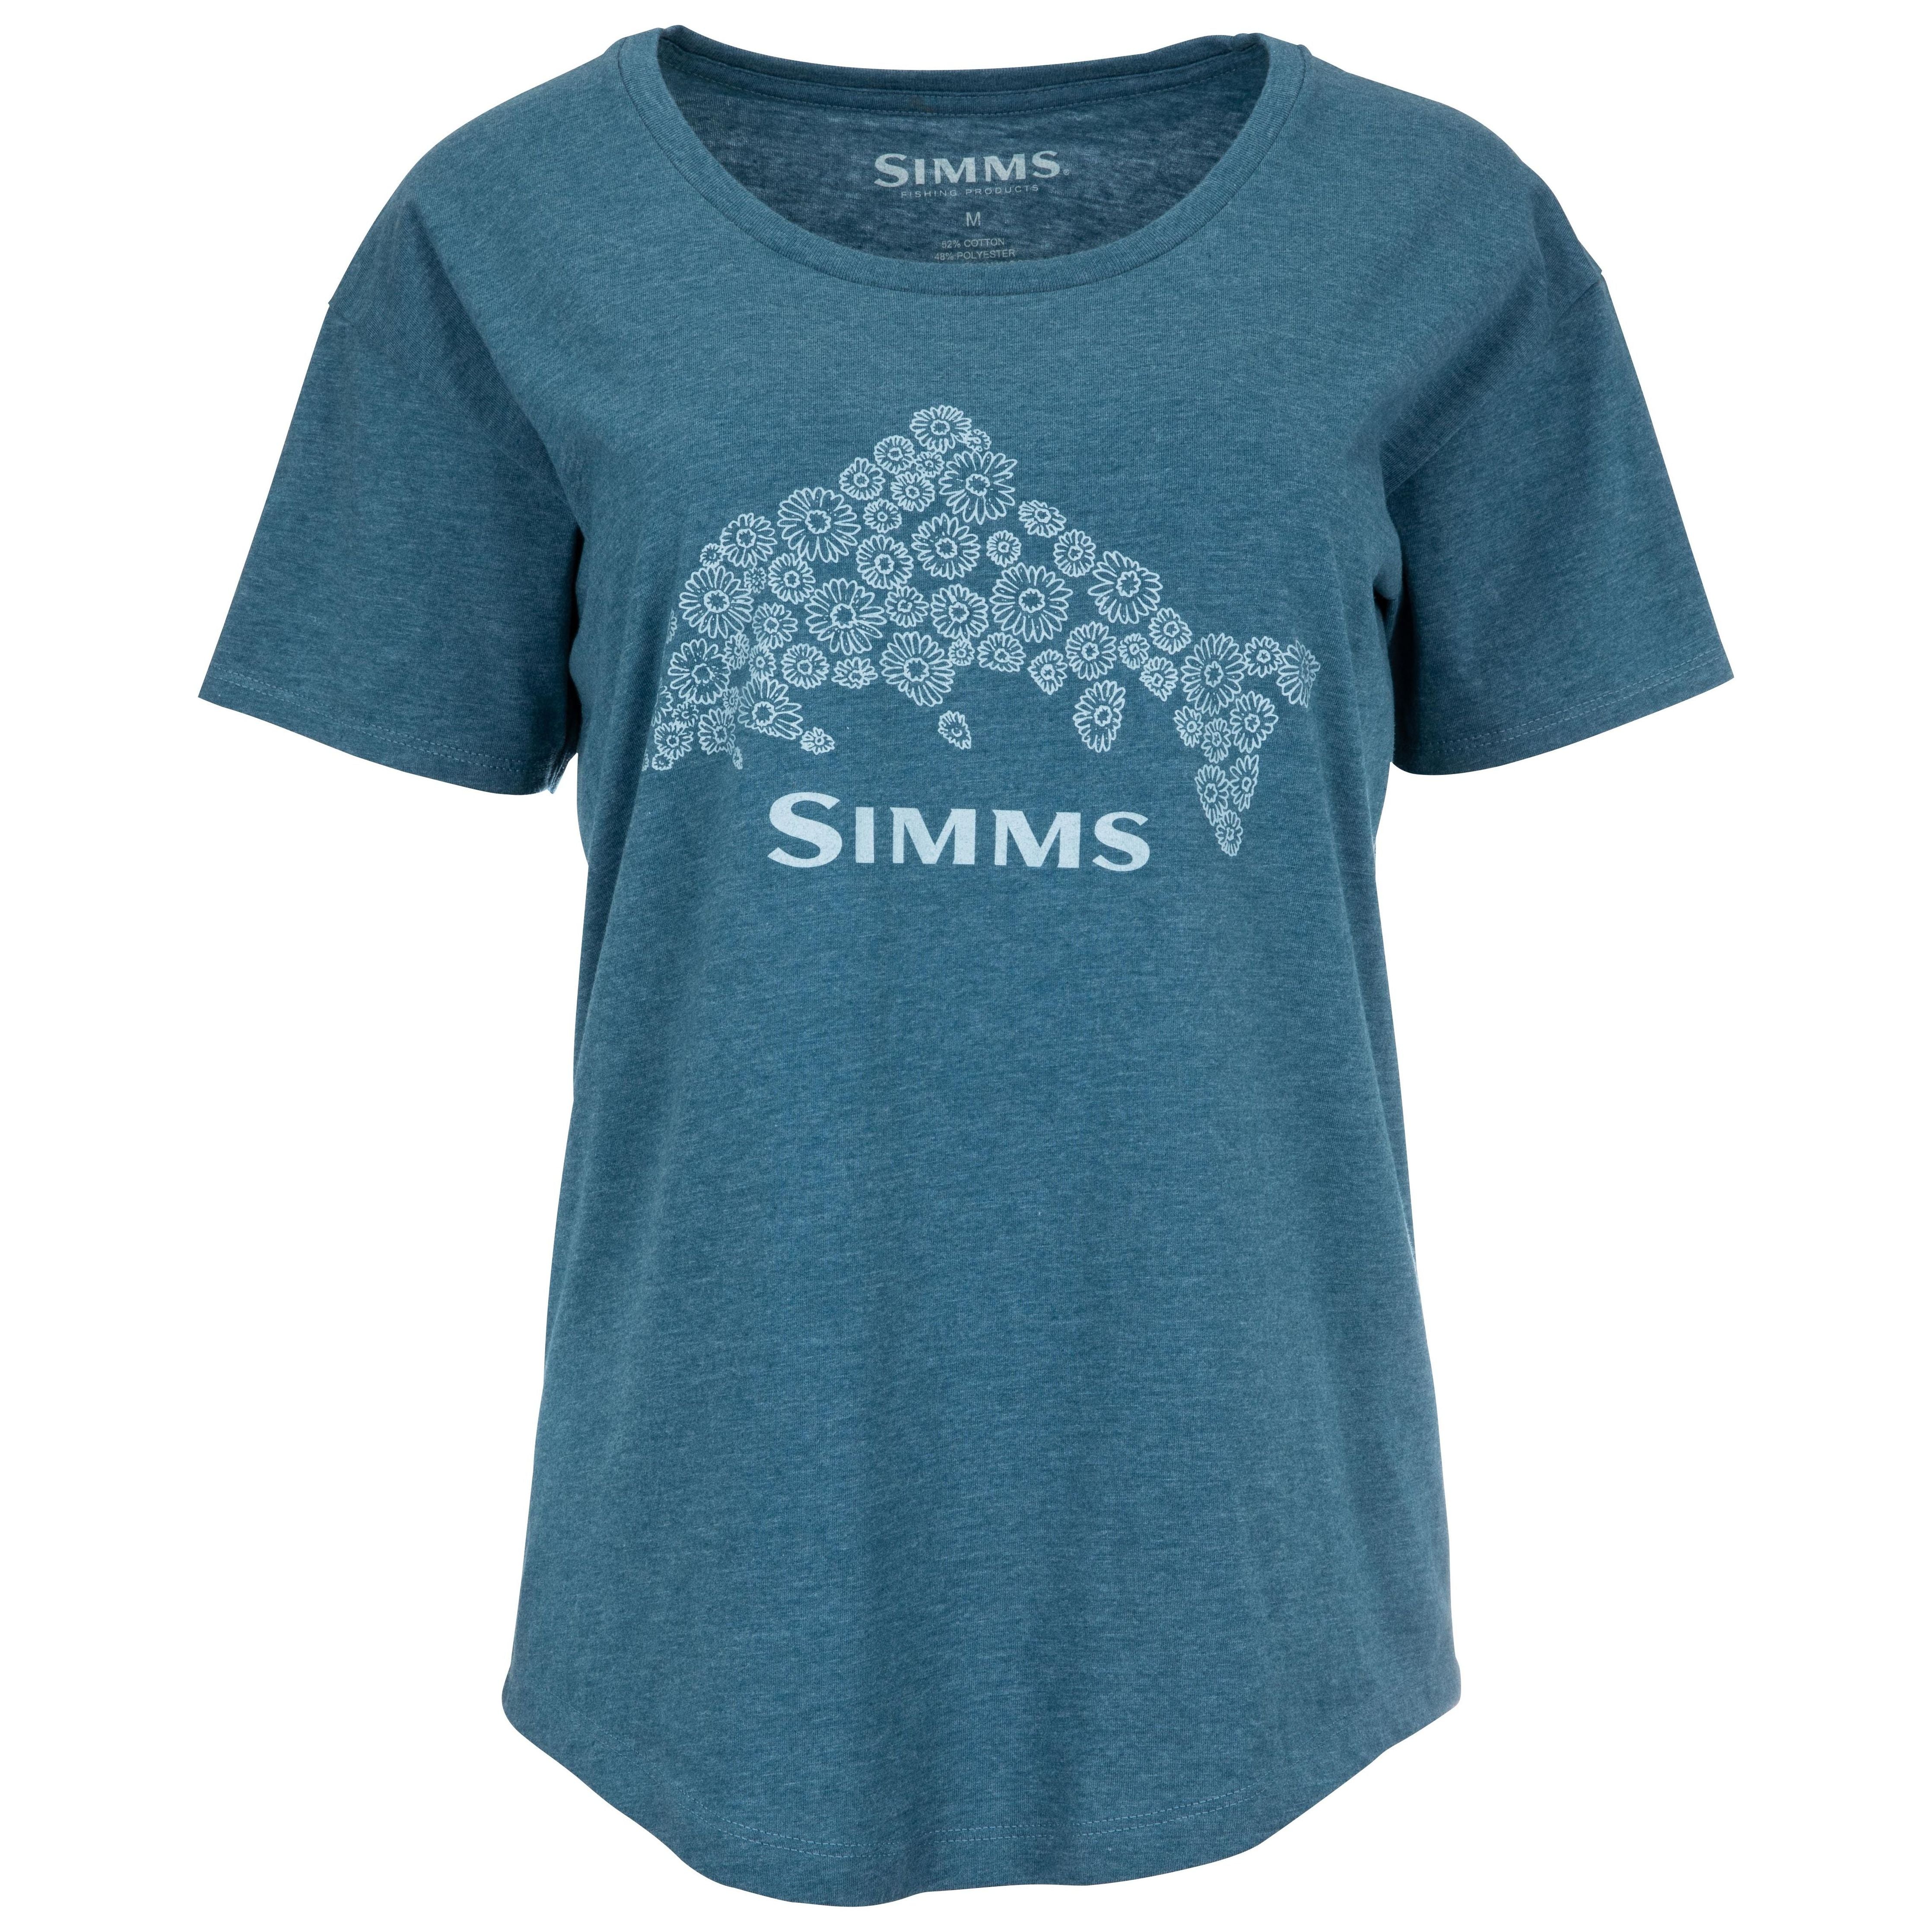 Simms Women's Floral Trout T-Shirt Steel Blue Heather Image 01